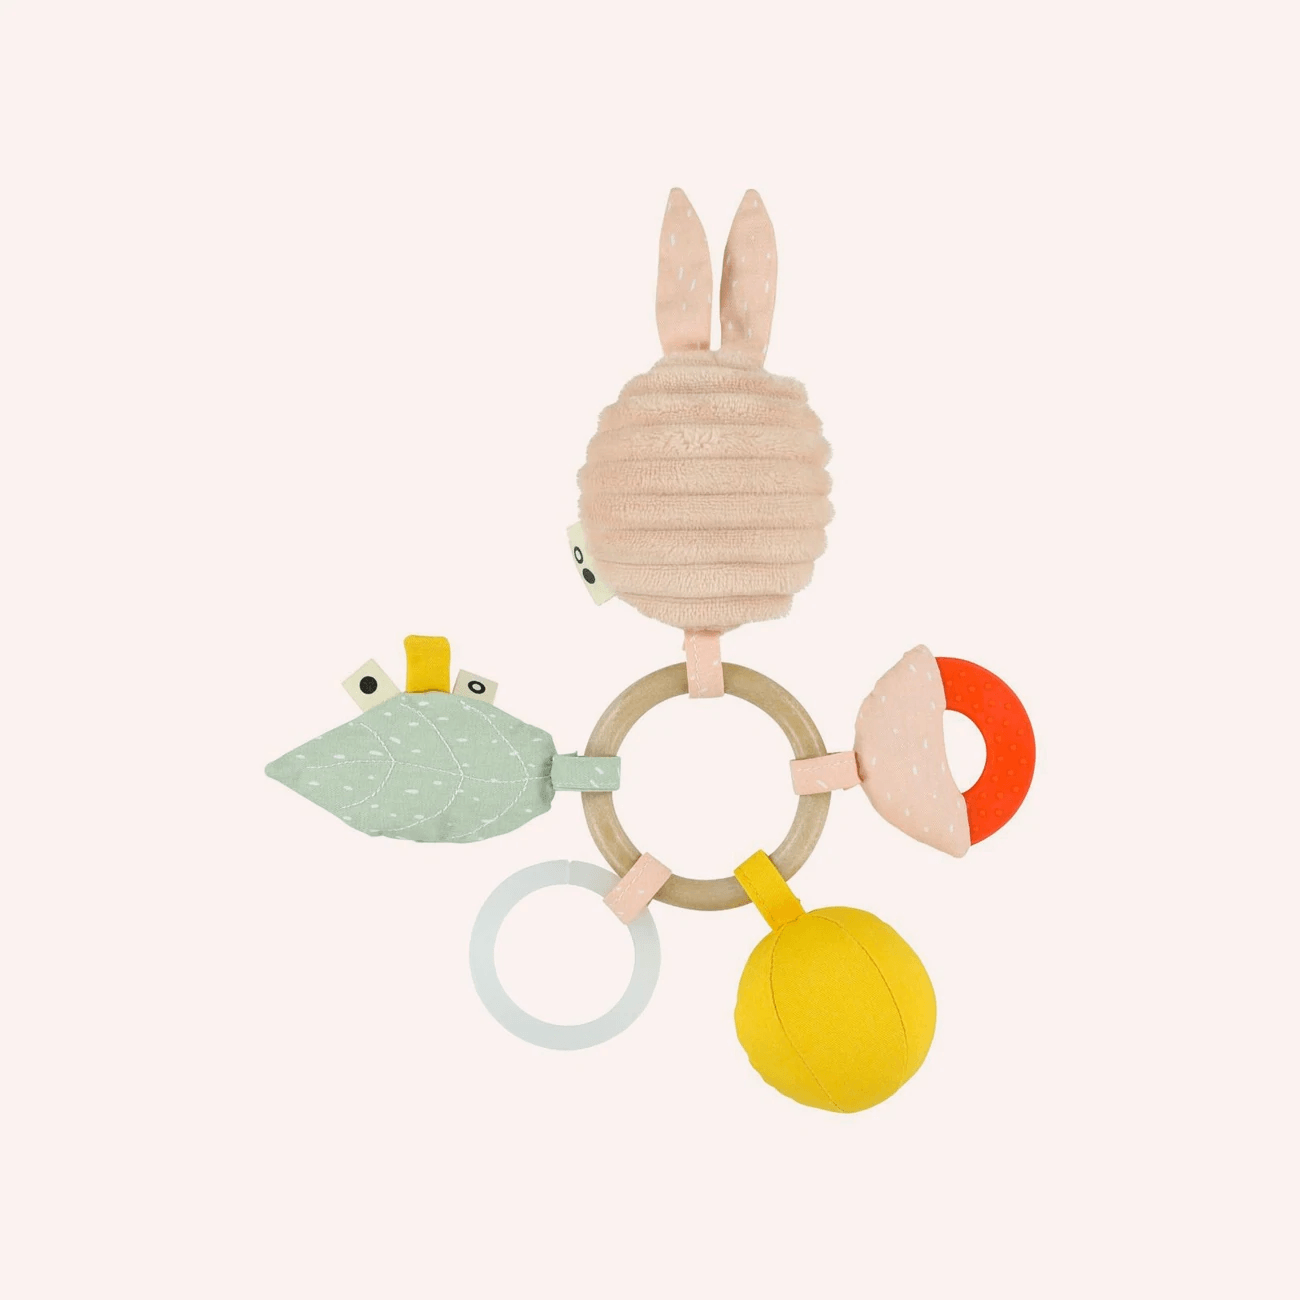 Activity Ring - Mrs. Rabbit